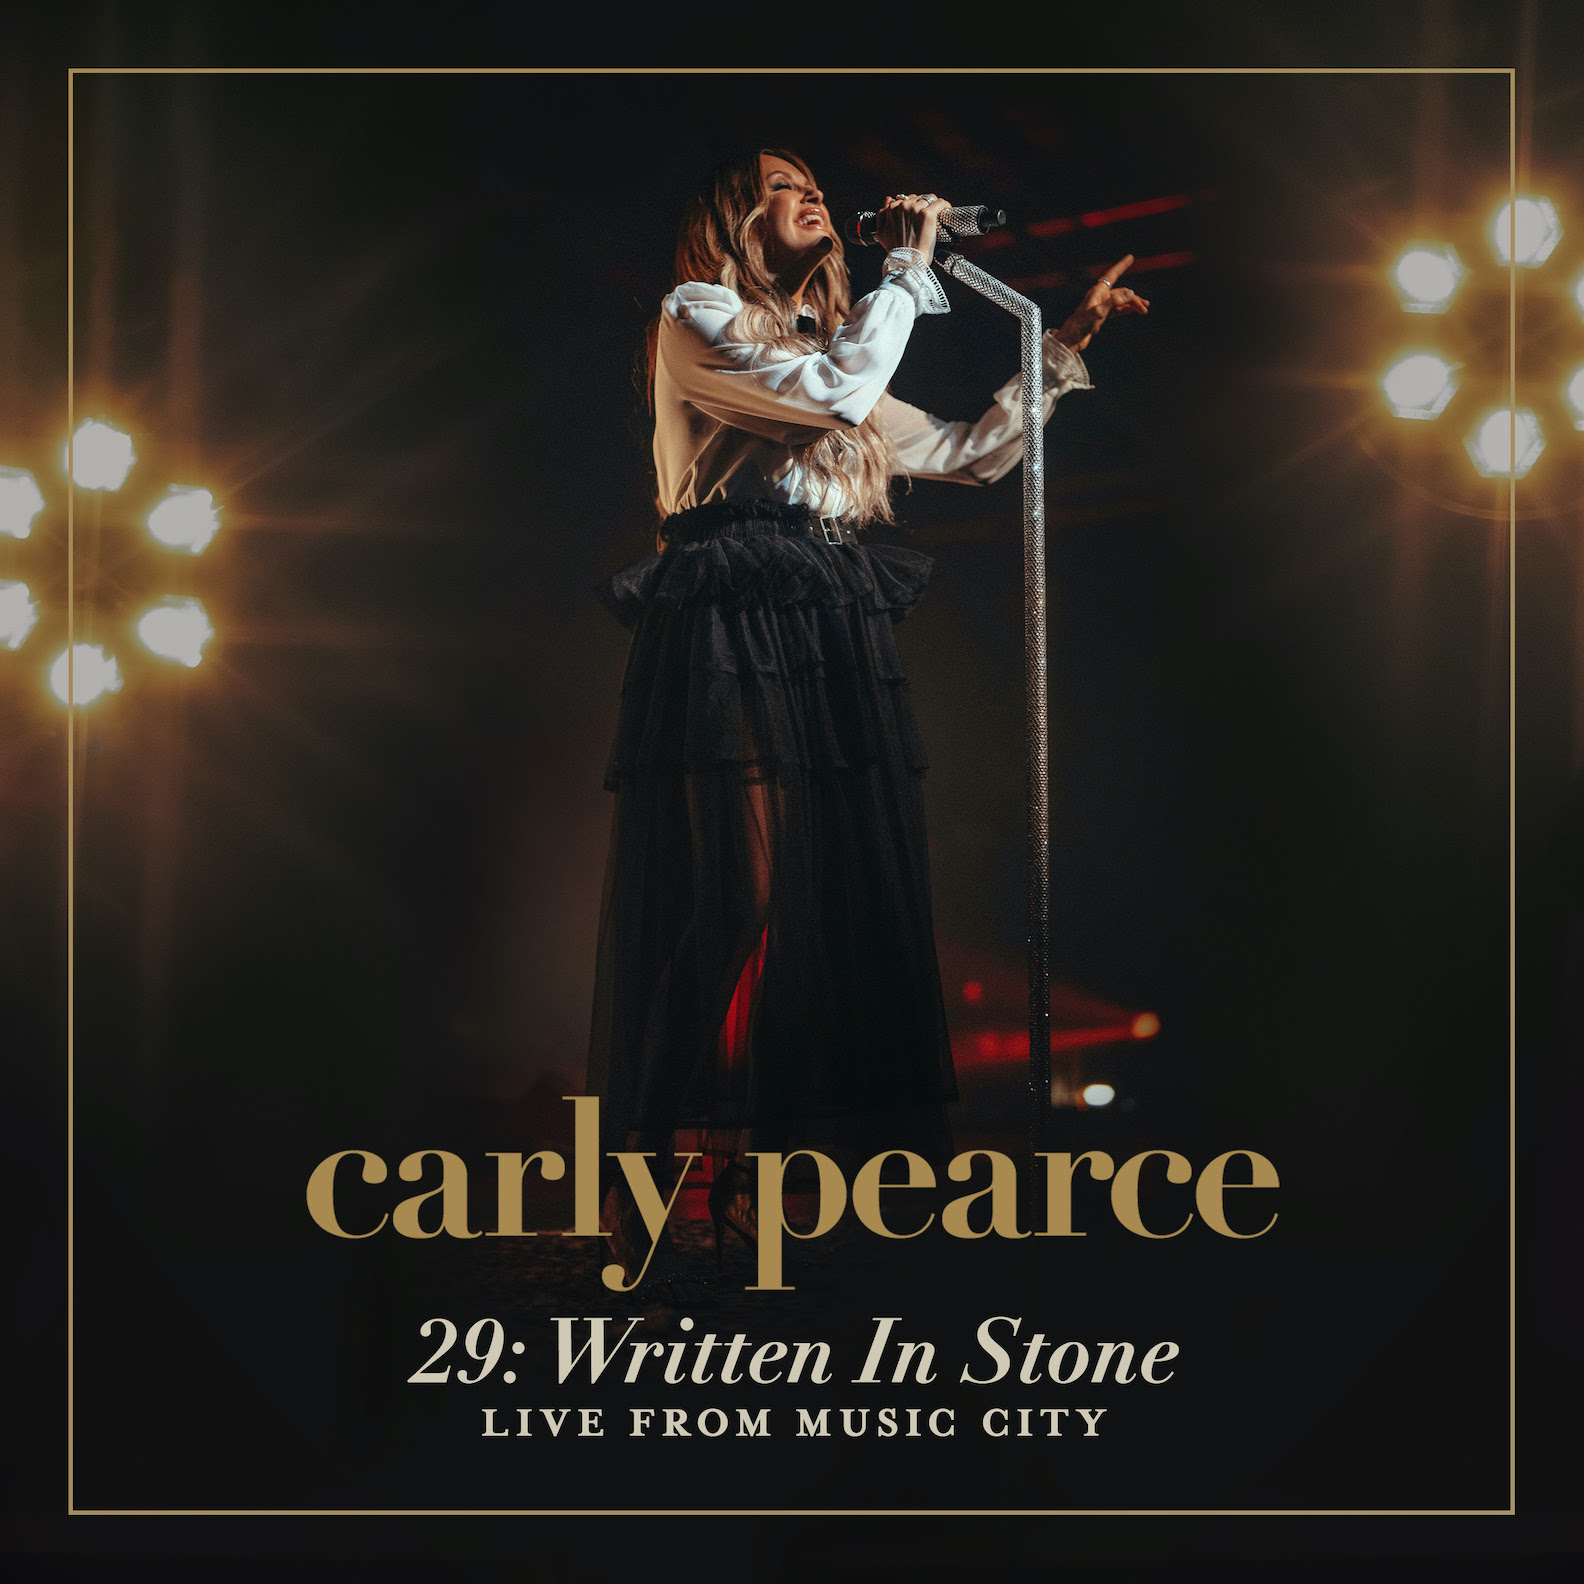 Carly Pearce album cover courtesy of Big Machine Records